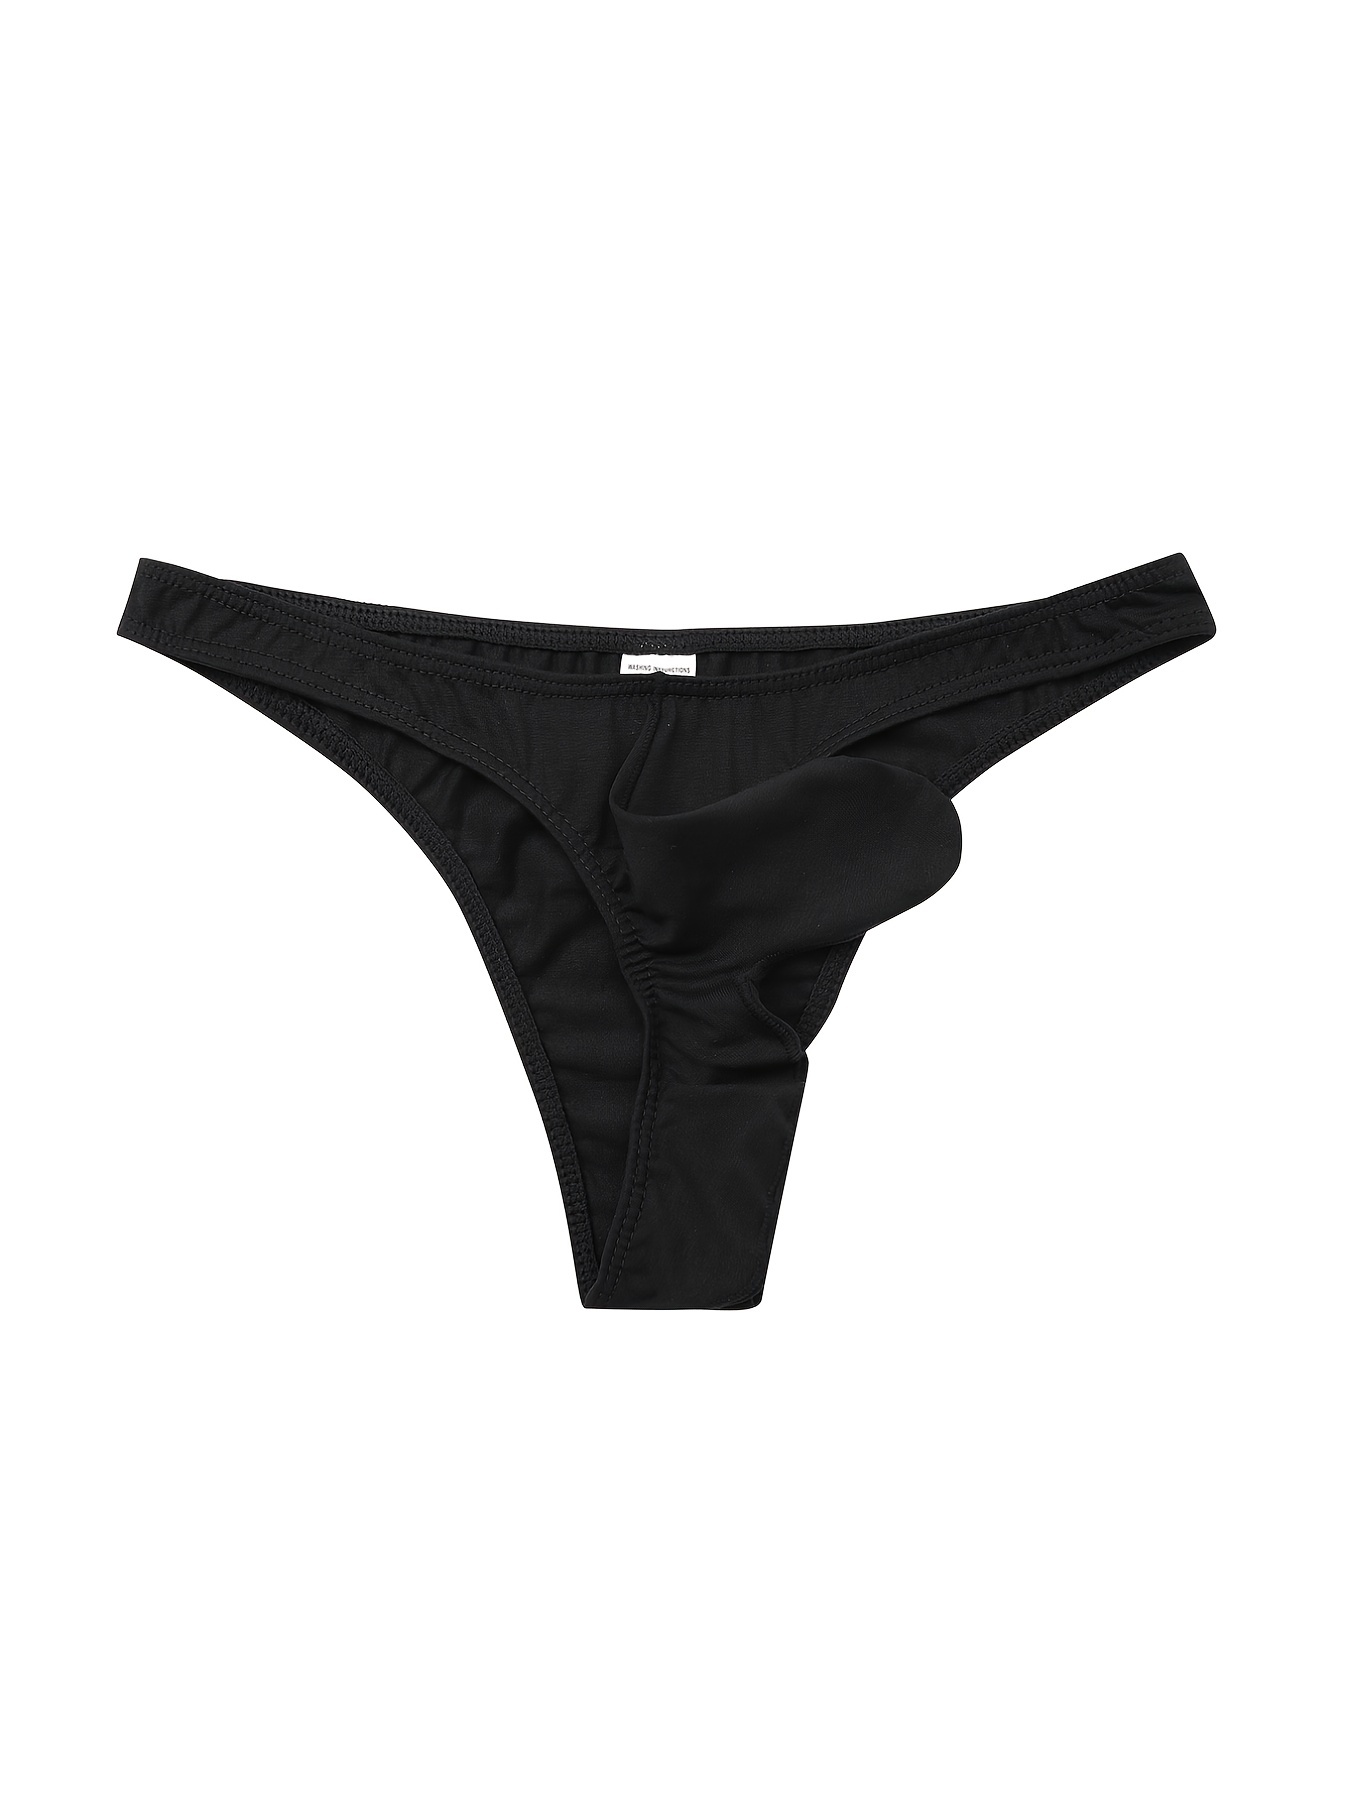 SEXY MEN INVISIBLE c string underwear posing pouch panties briefs